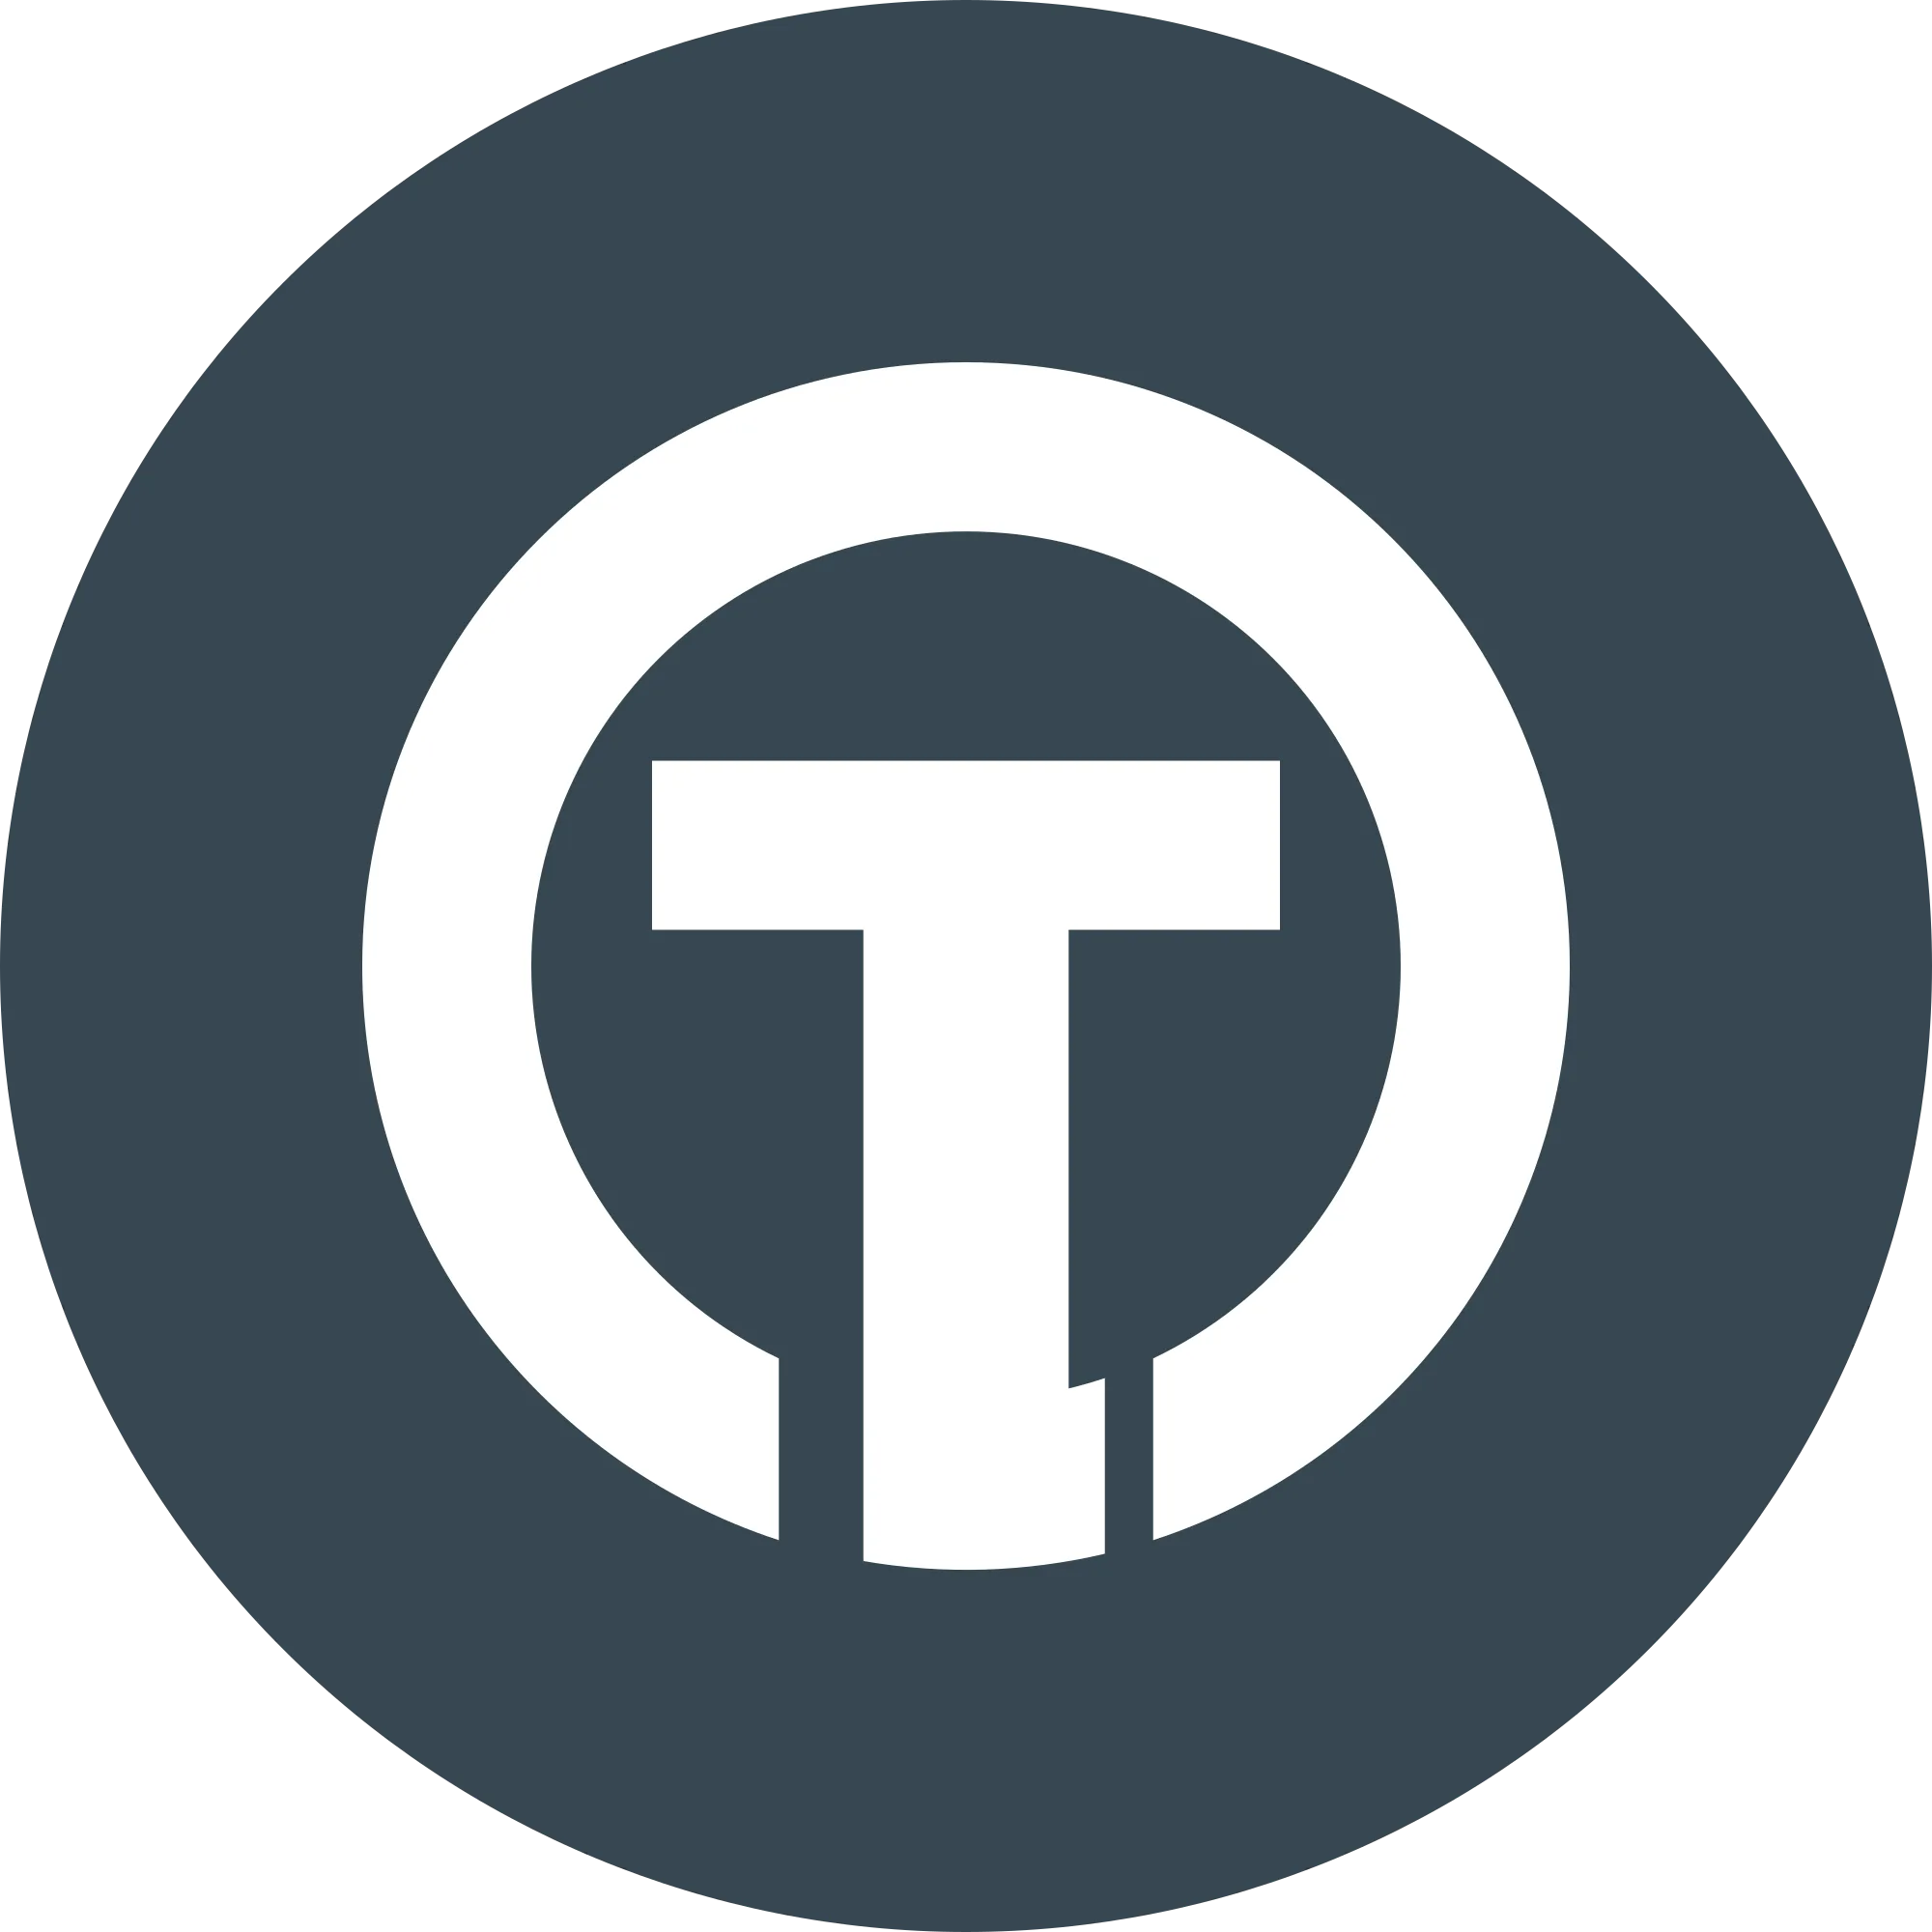 TrezarCoin logo in png format